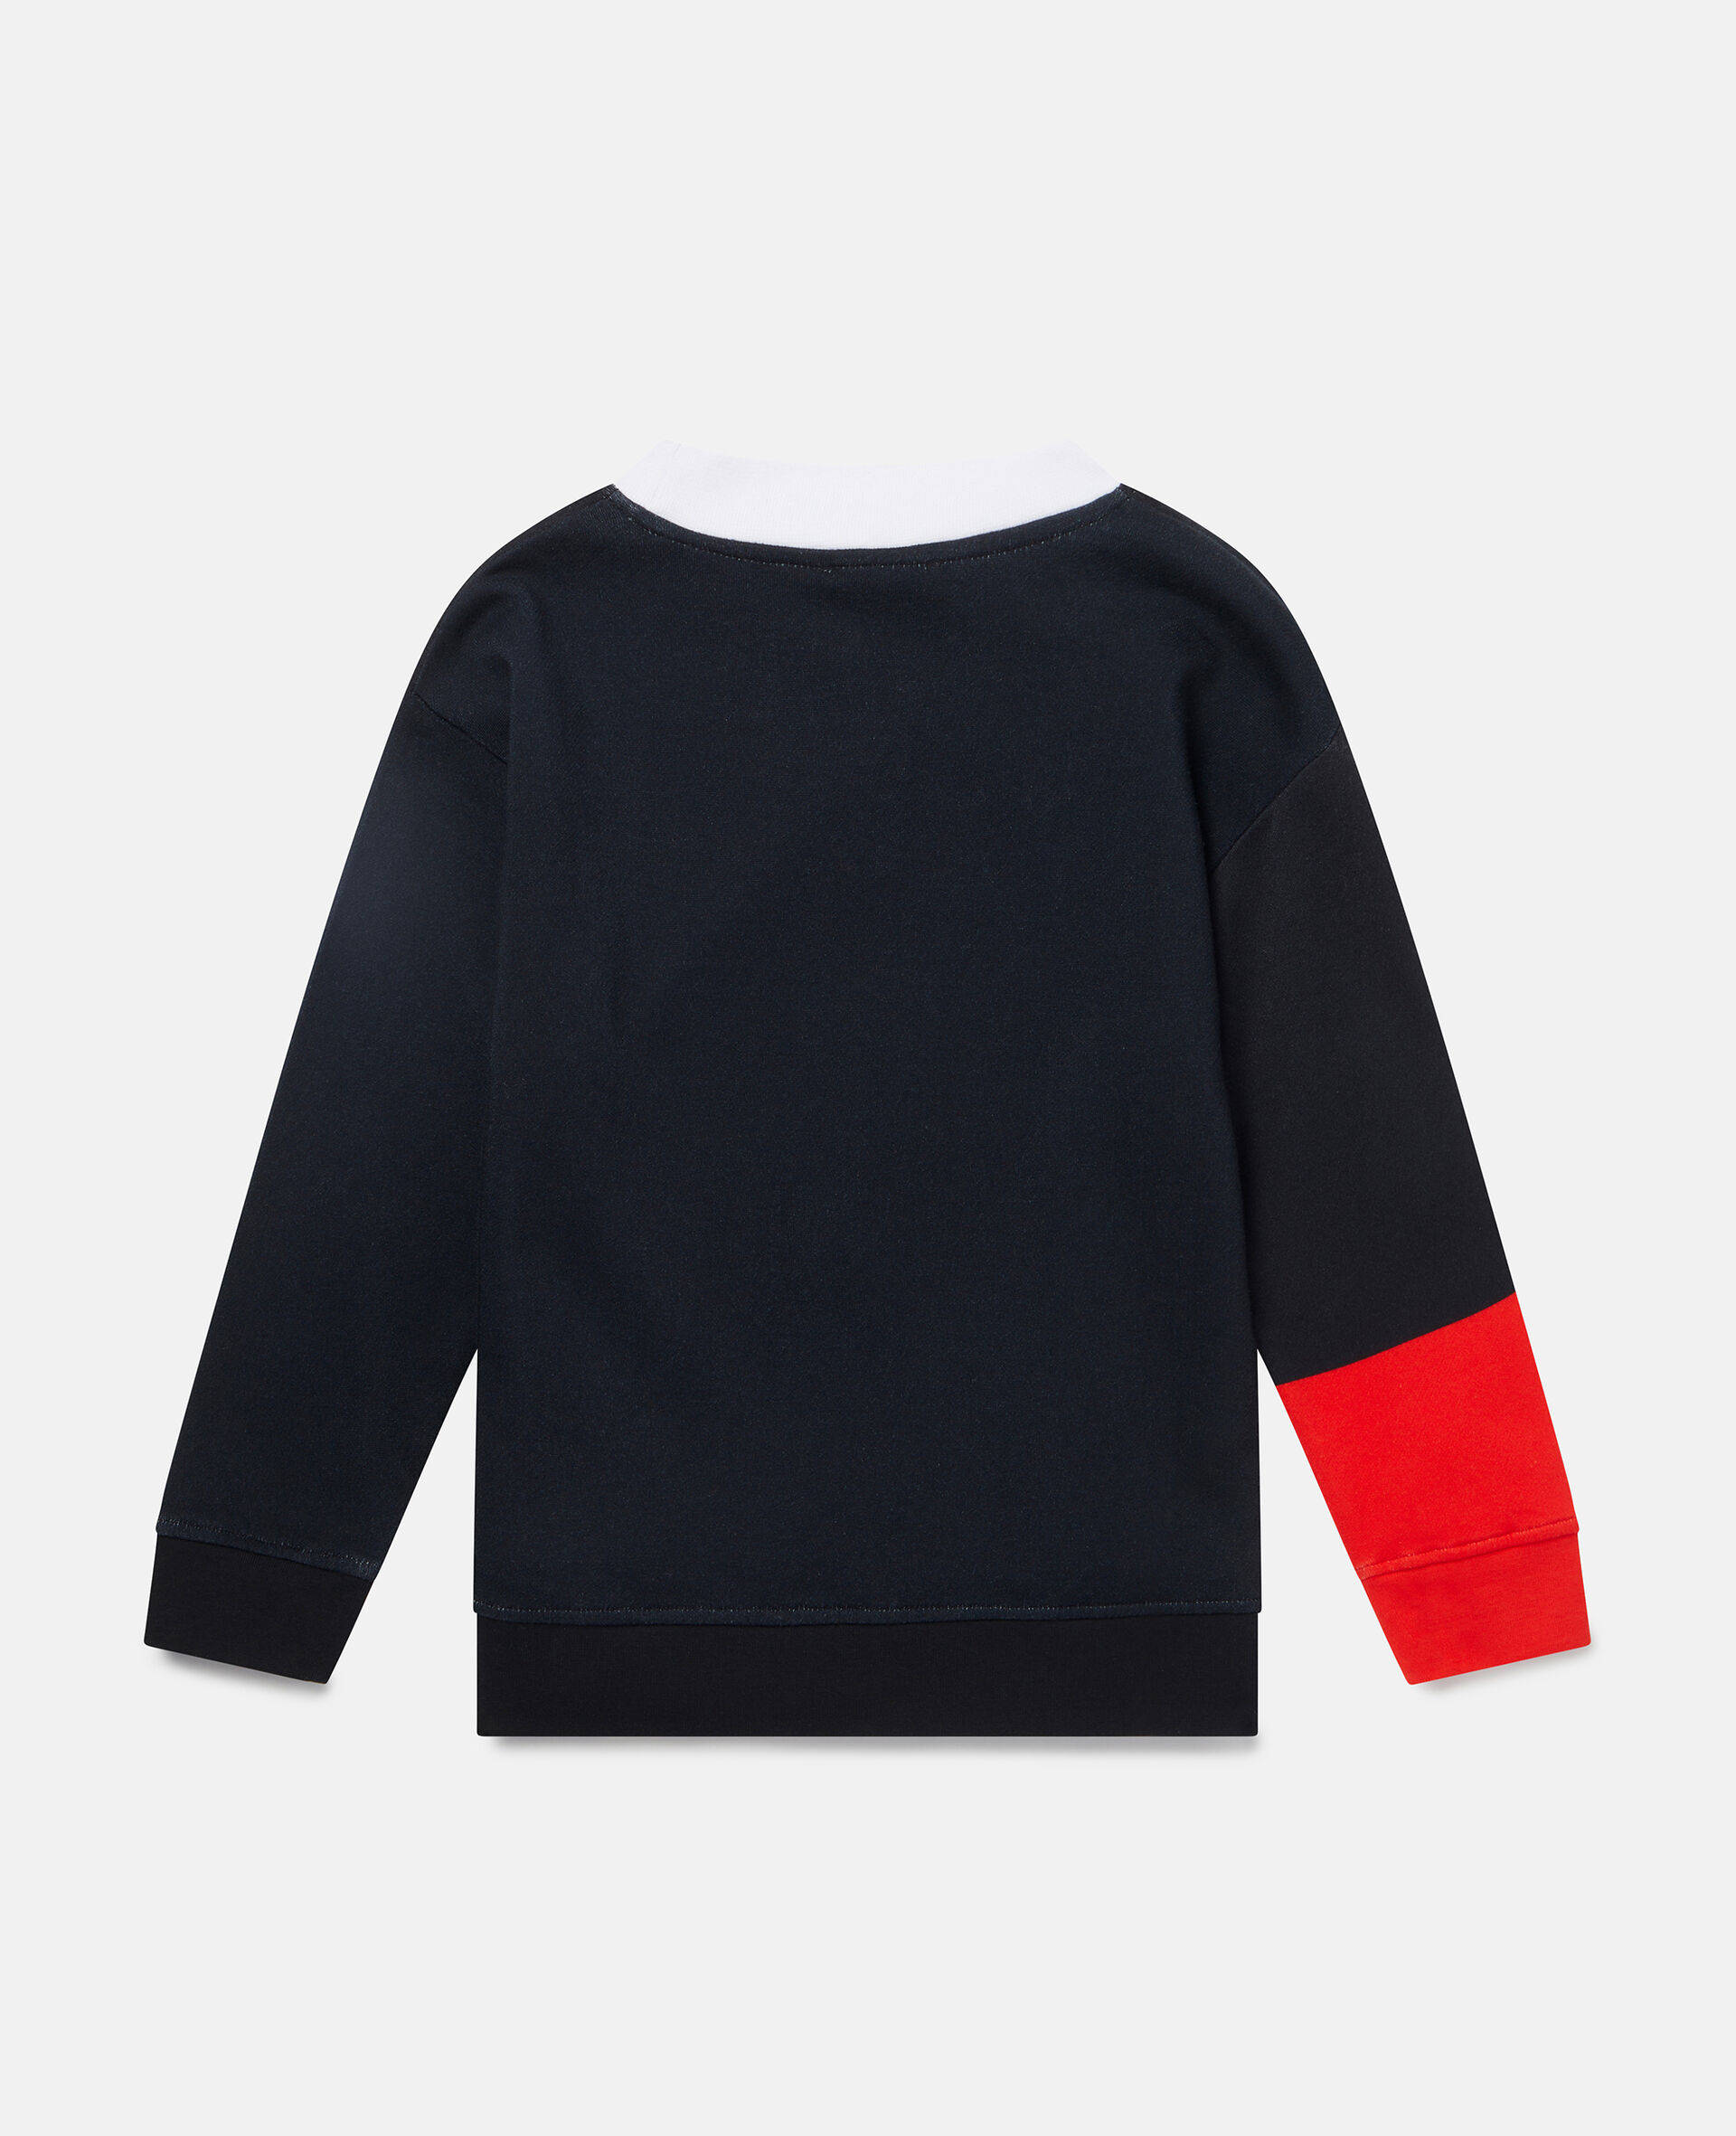 SMC Print Cotton Fleece Sweatshirt-Black-large image number 2